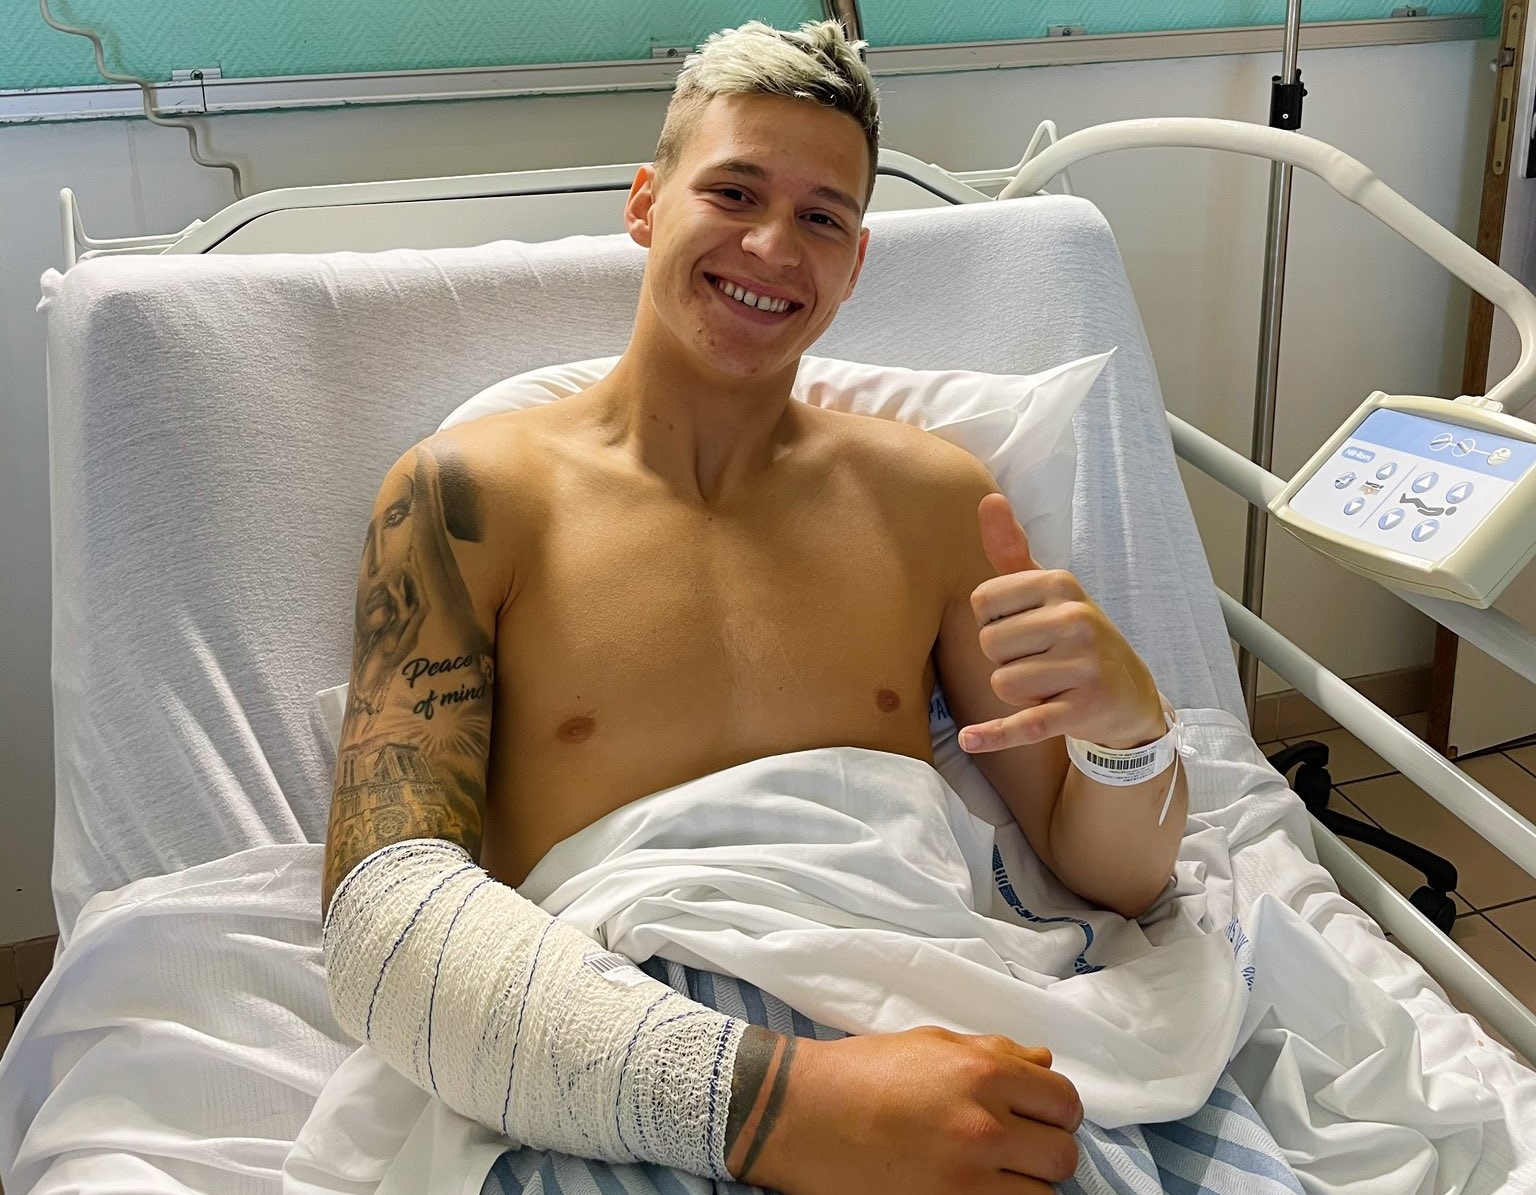 Fabio Quartararo undergoes a successful arm pump surgery